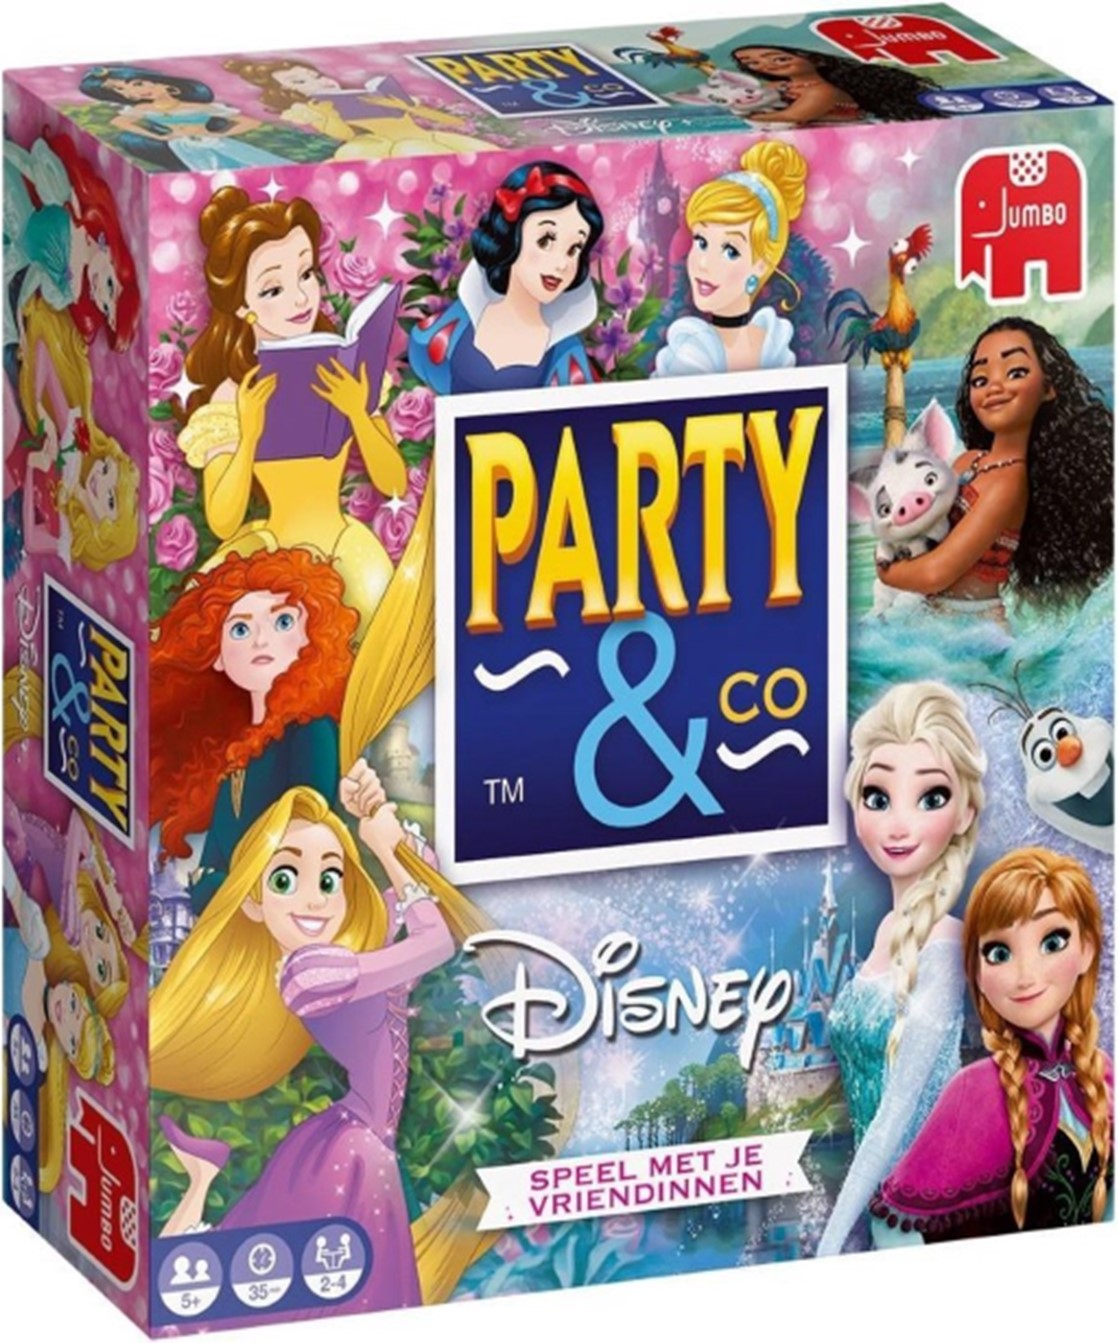 Lastig microfoon musical Spel Party & Co. Prinses. Disney; 722533; 8710126197356